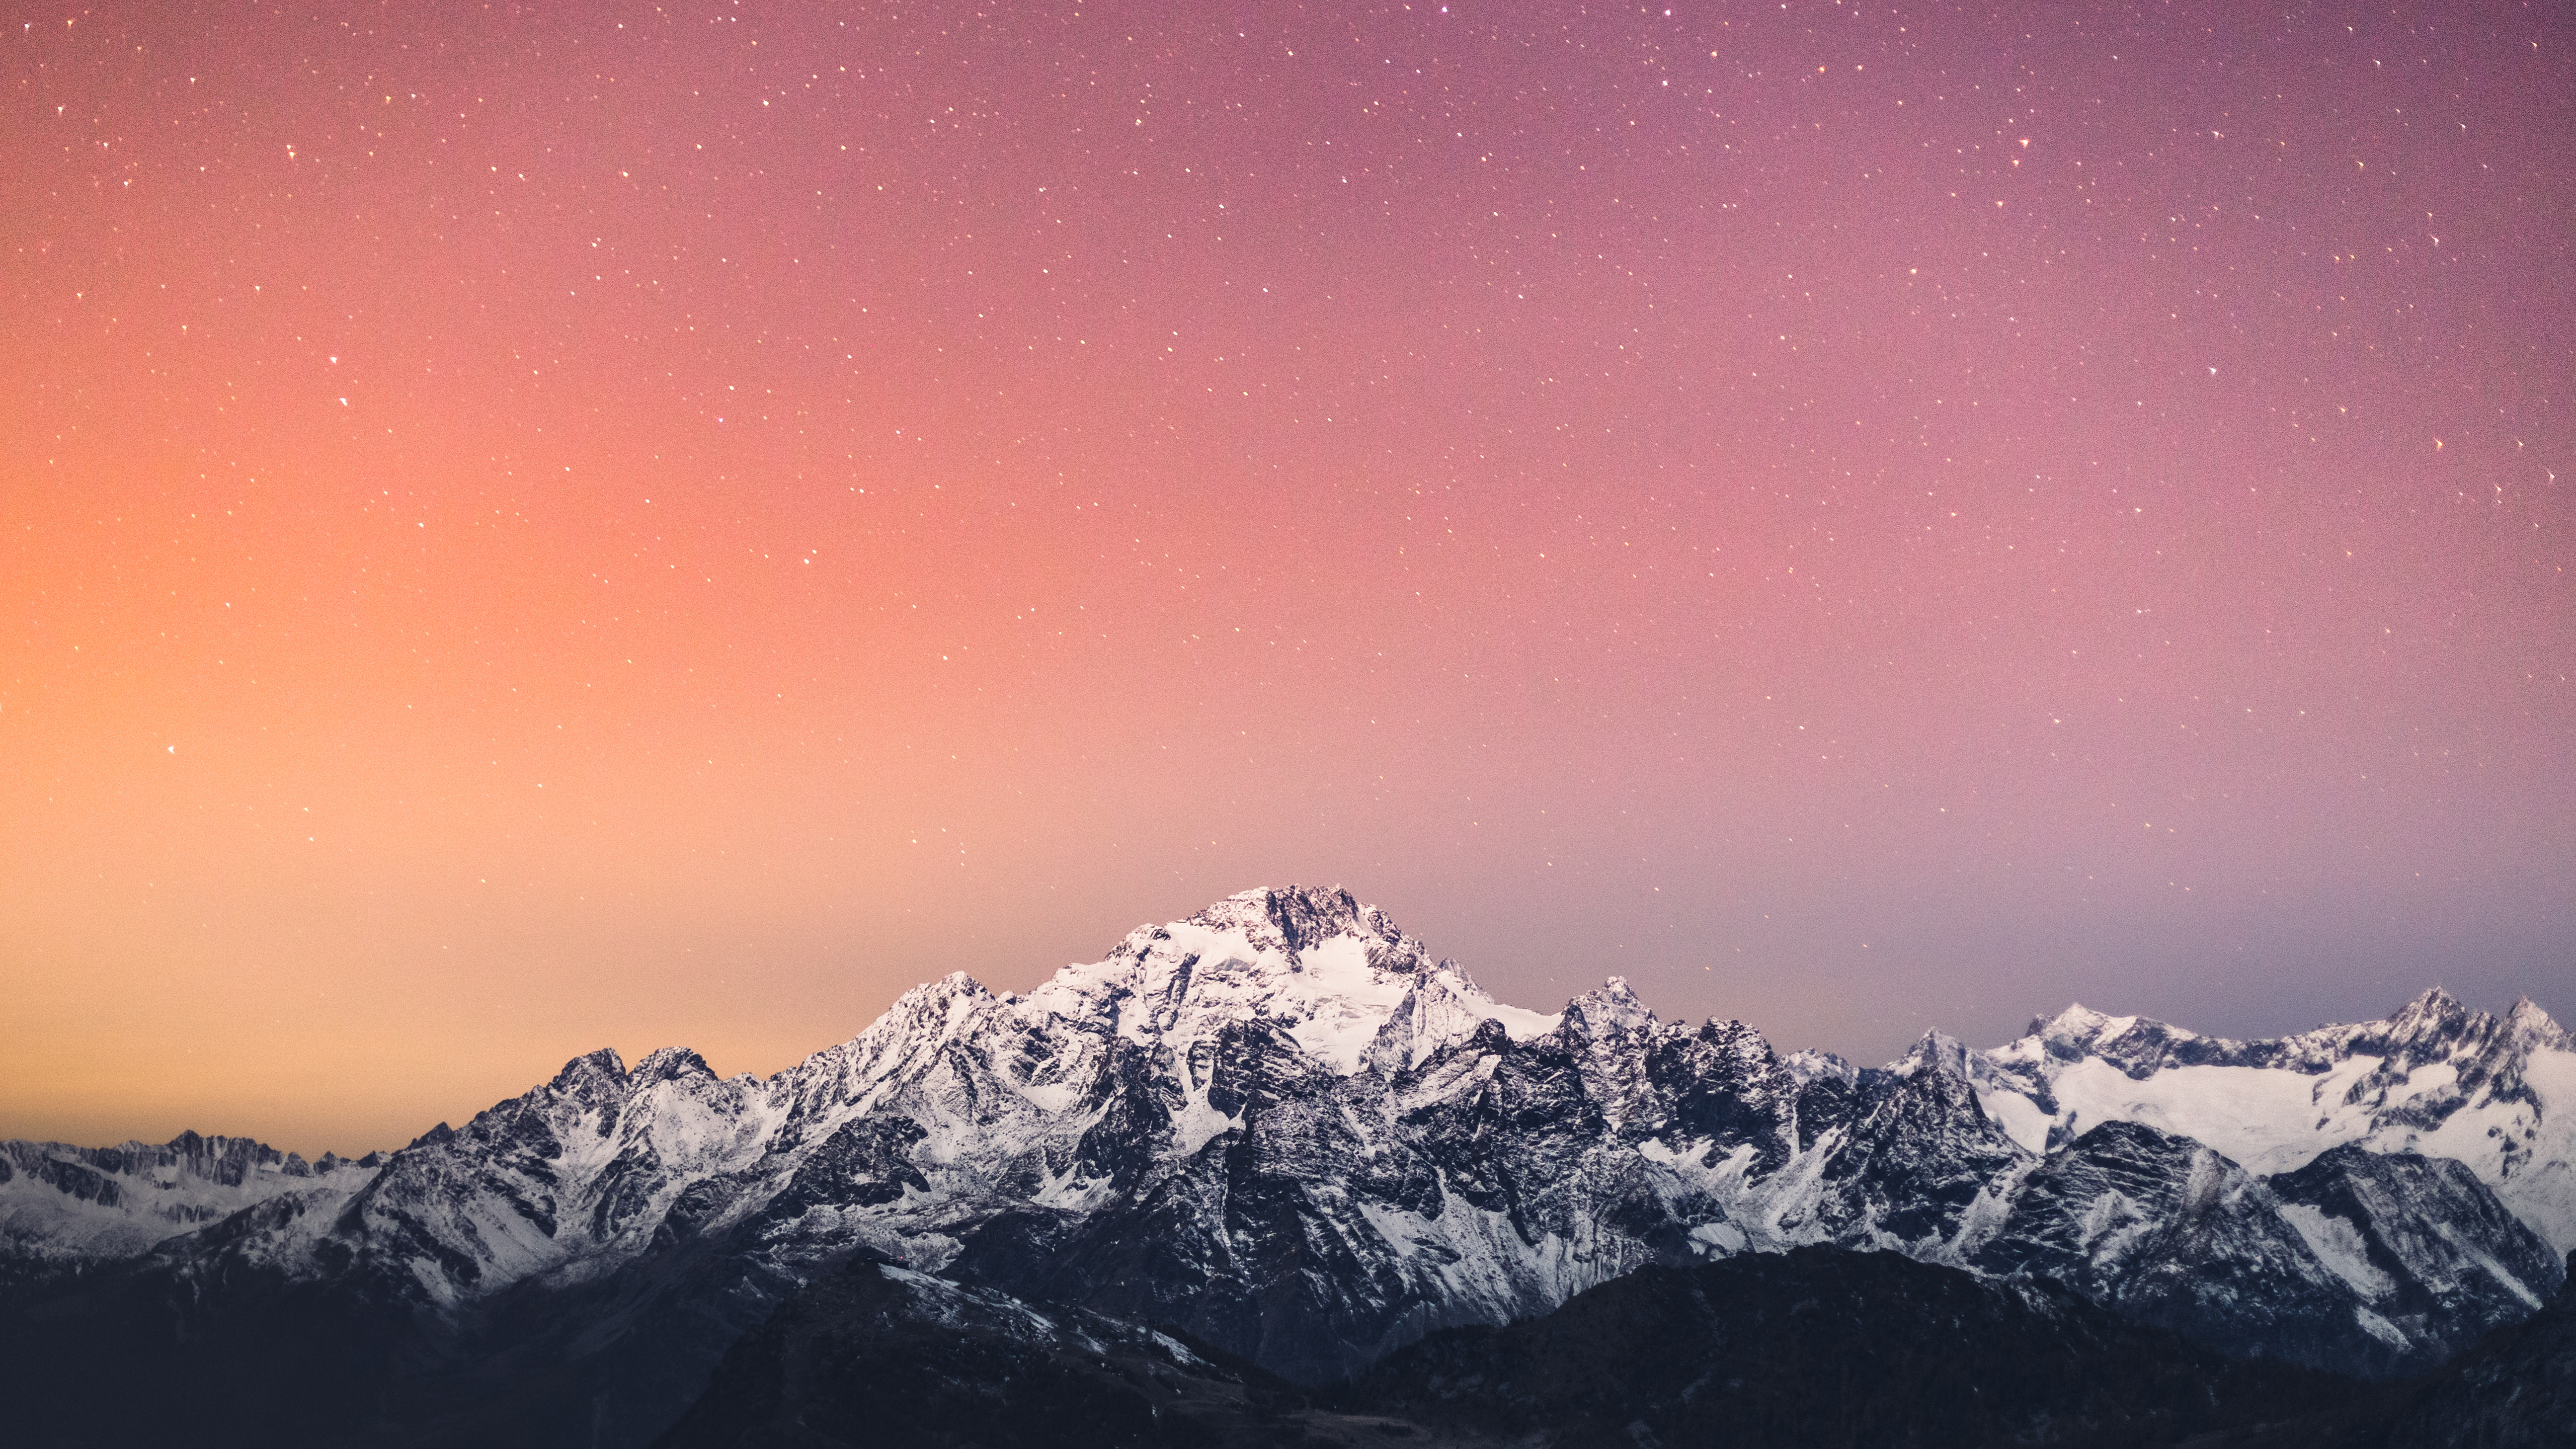 12,024,718 Mountain Sky Images, Stock Photos & Vectors | Shutterstock